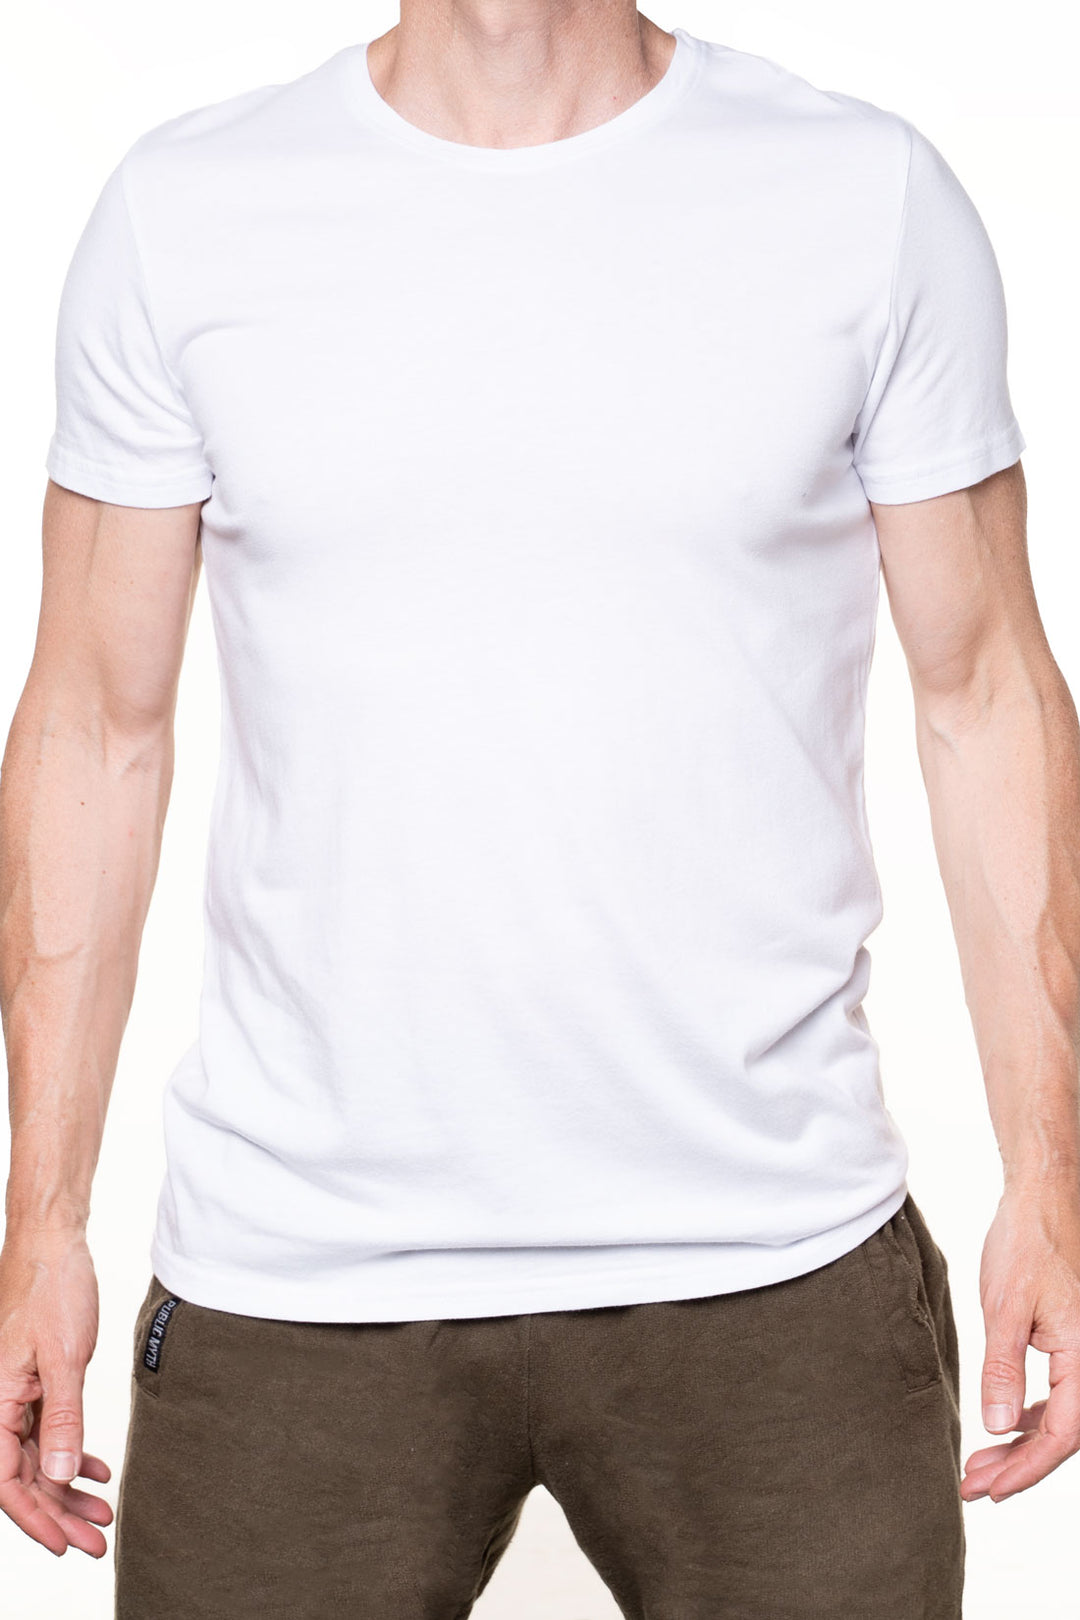 white men's bamboo T-shirt